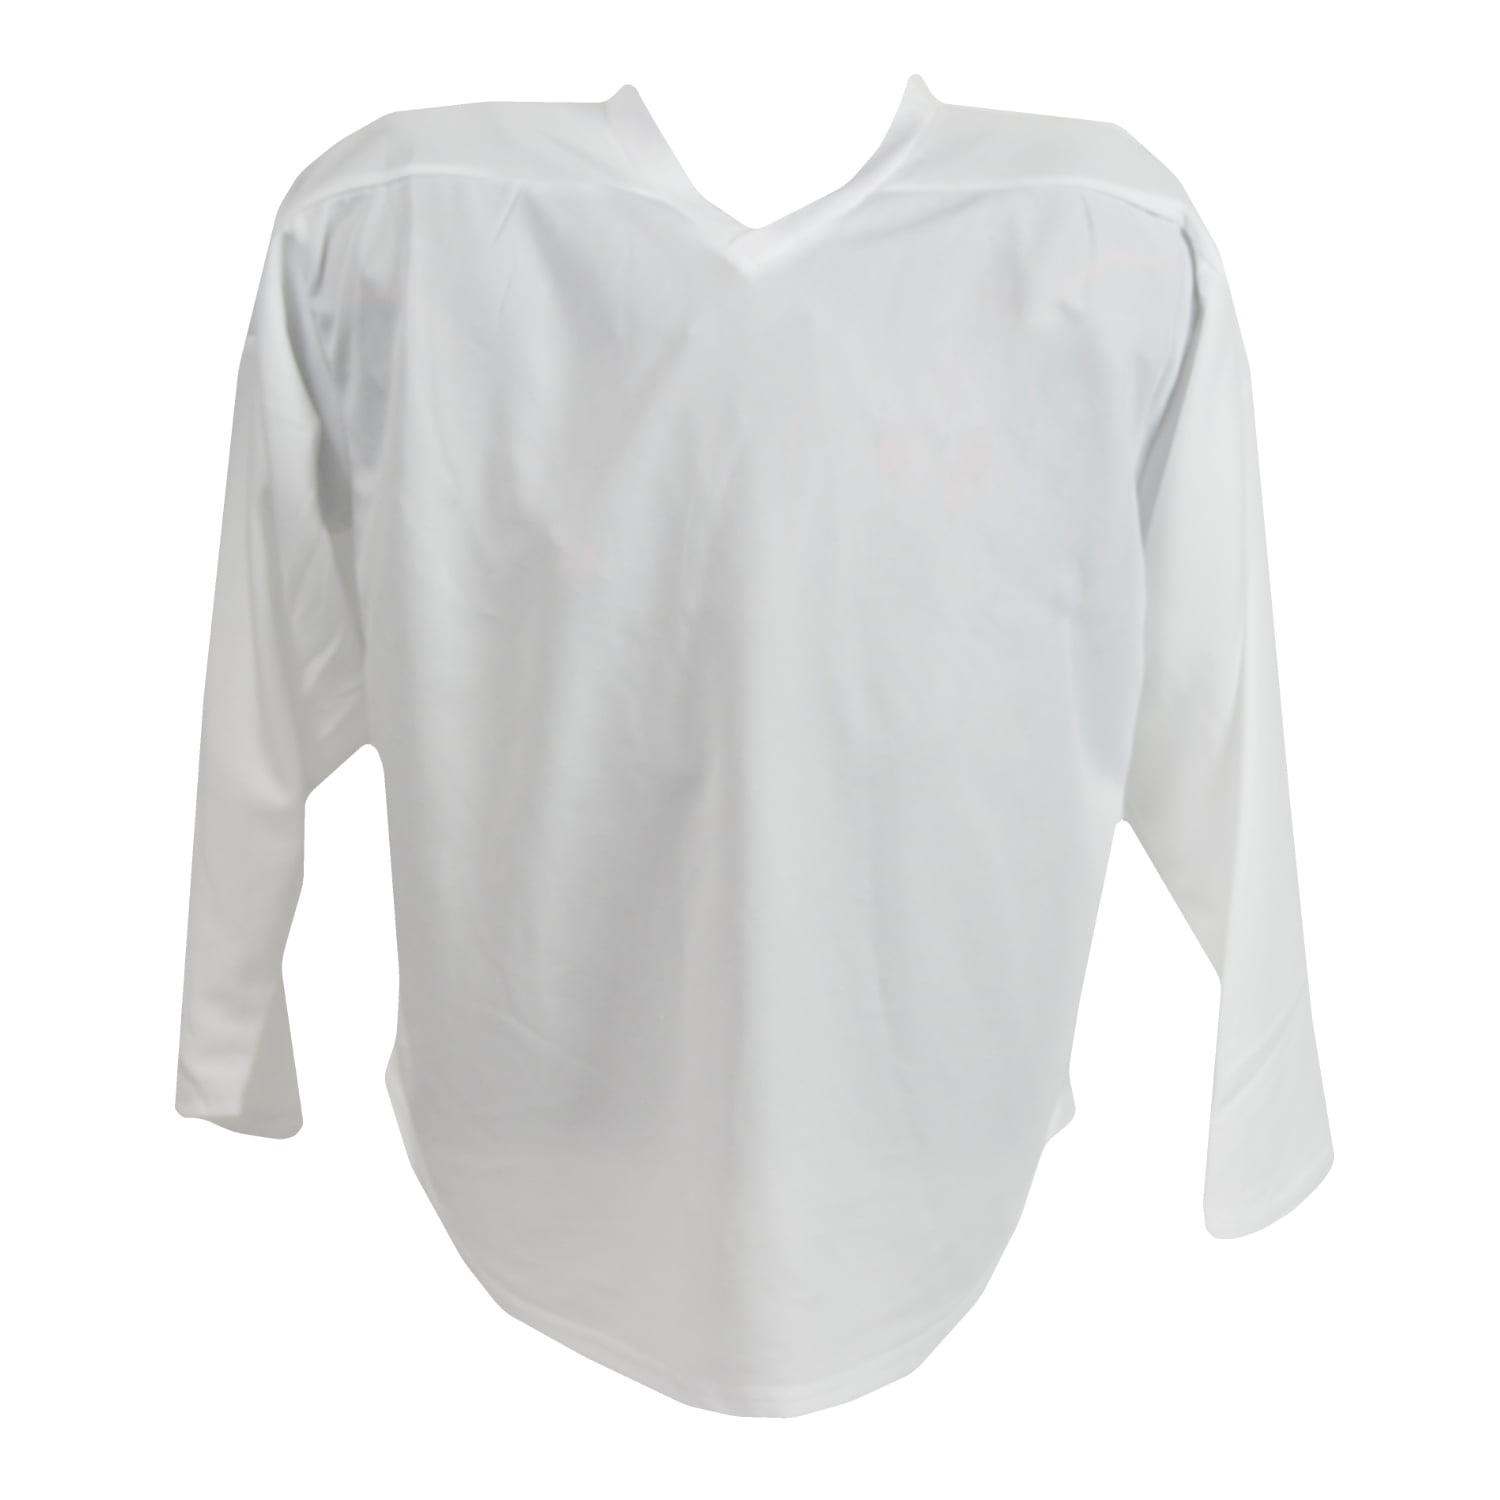 PEARSOX 100 Denier Blank Polyester Hockey Jersey - White (Youth Goalie) 